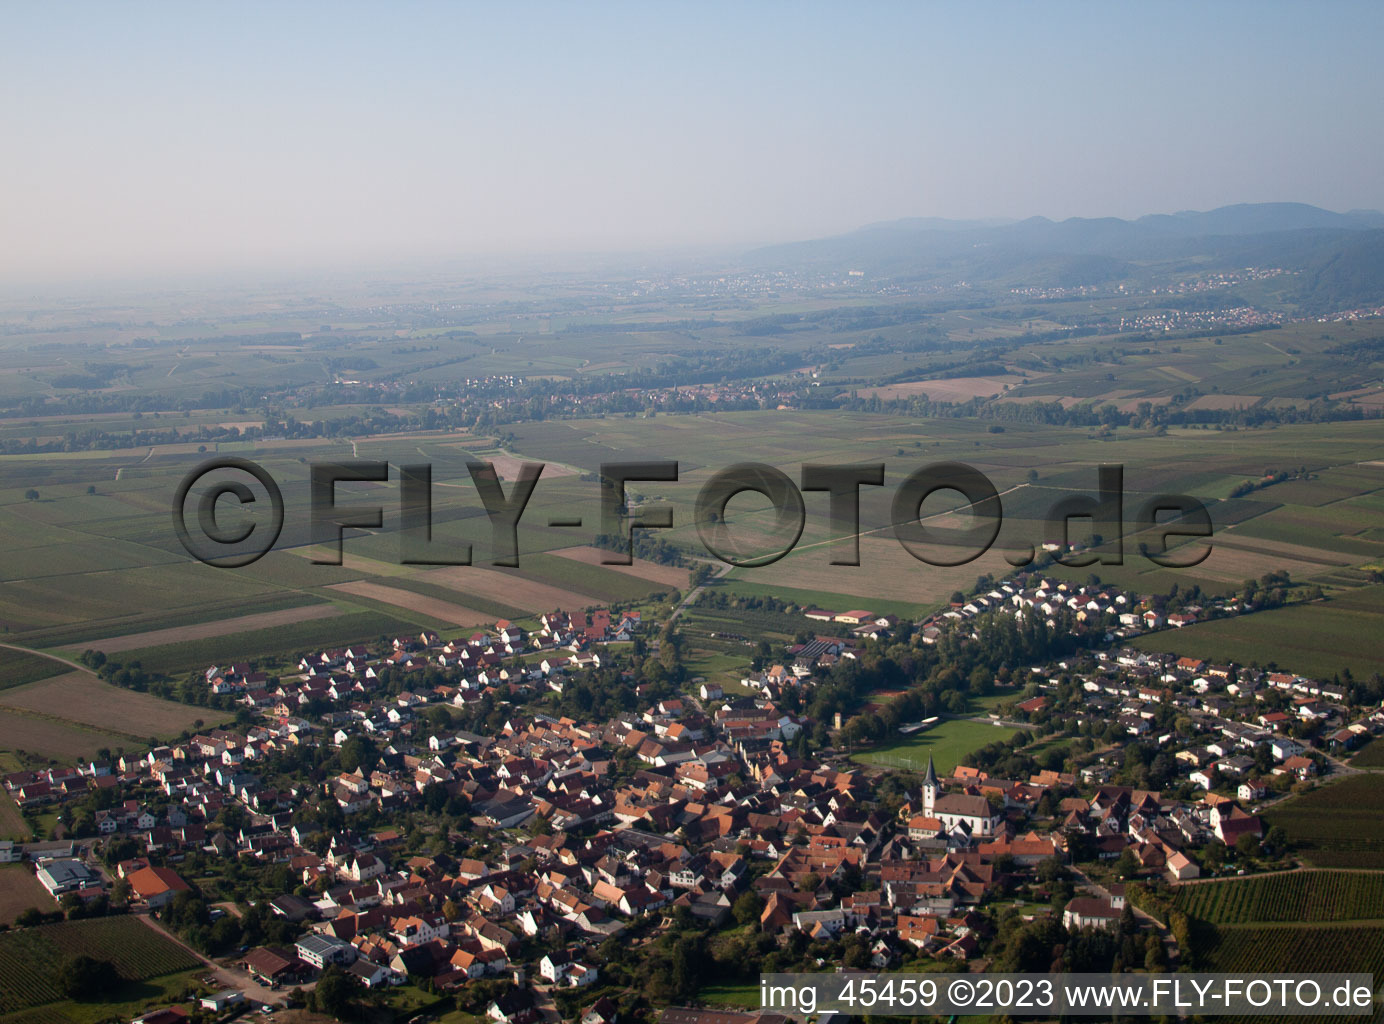 District Wollmesheim in Landau in der Pfalz in the state Rhineland-Palatinate, Germany seen from a drone